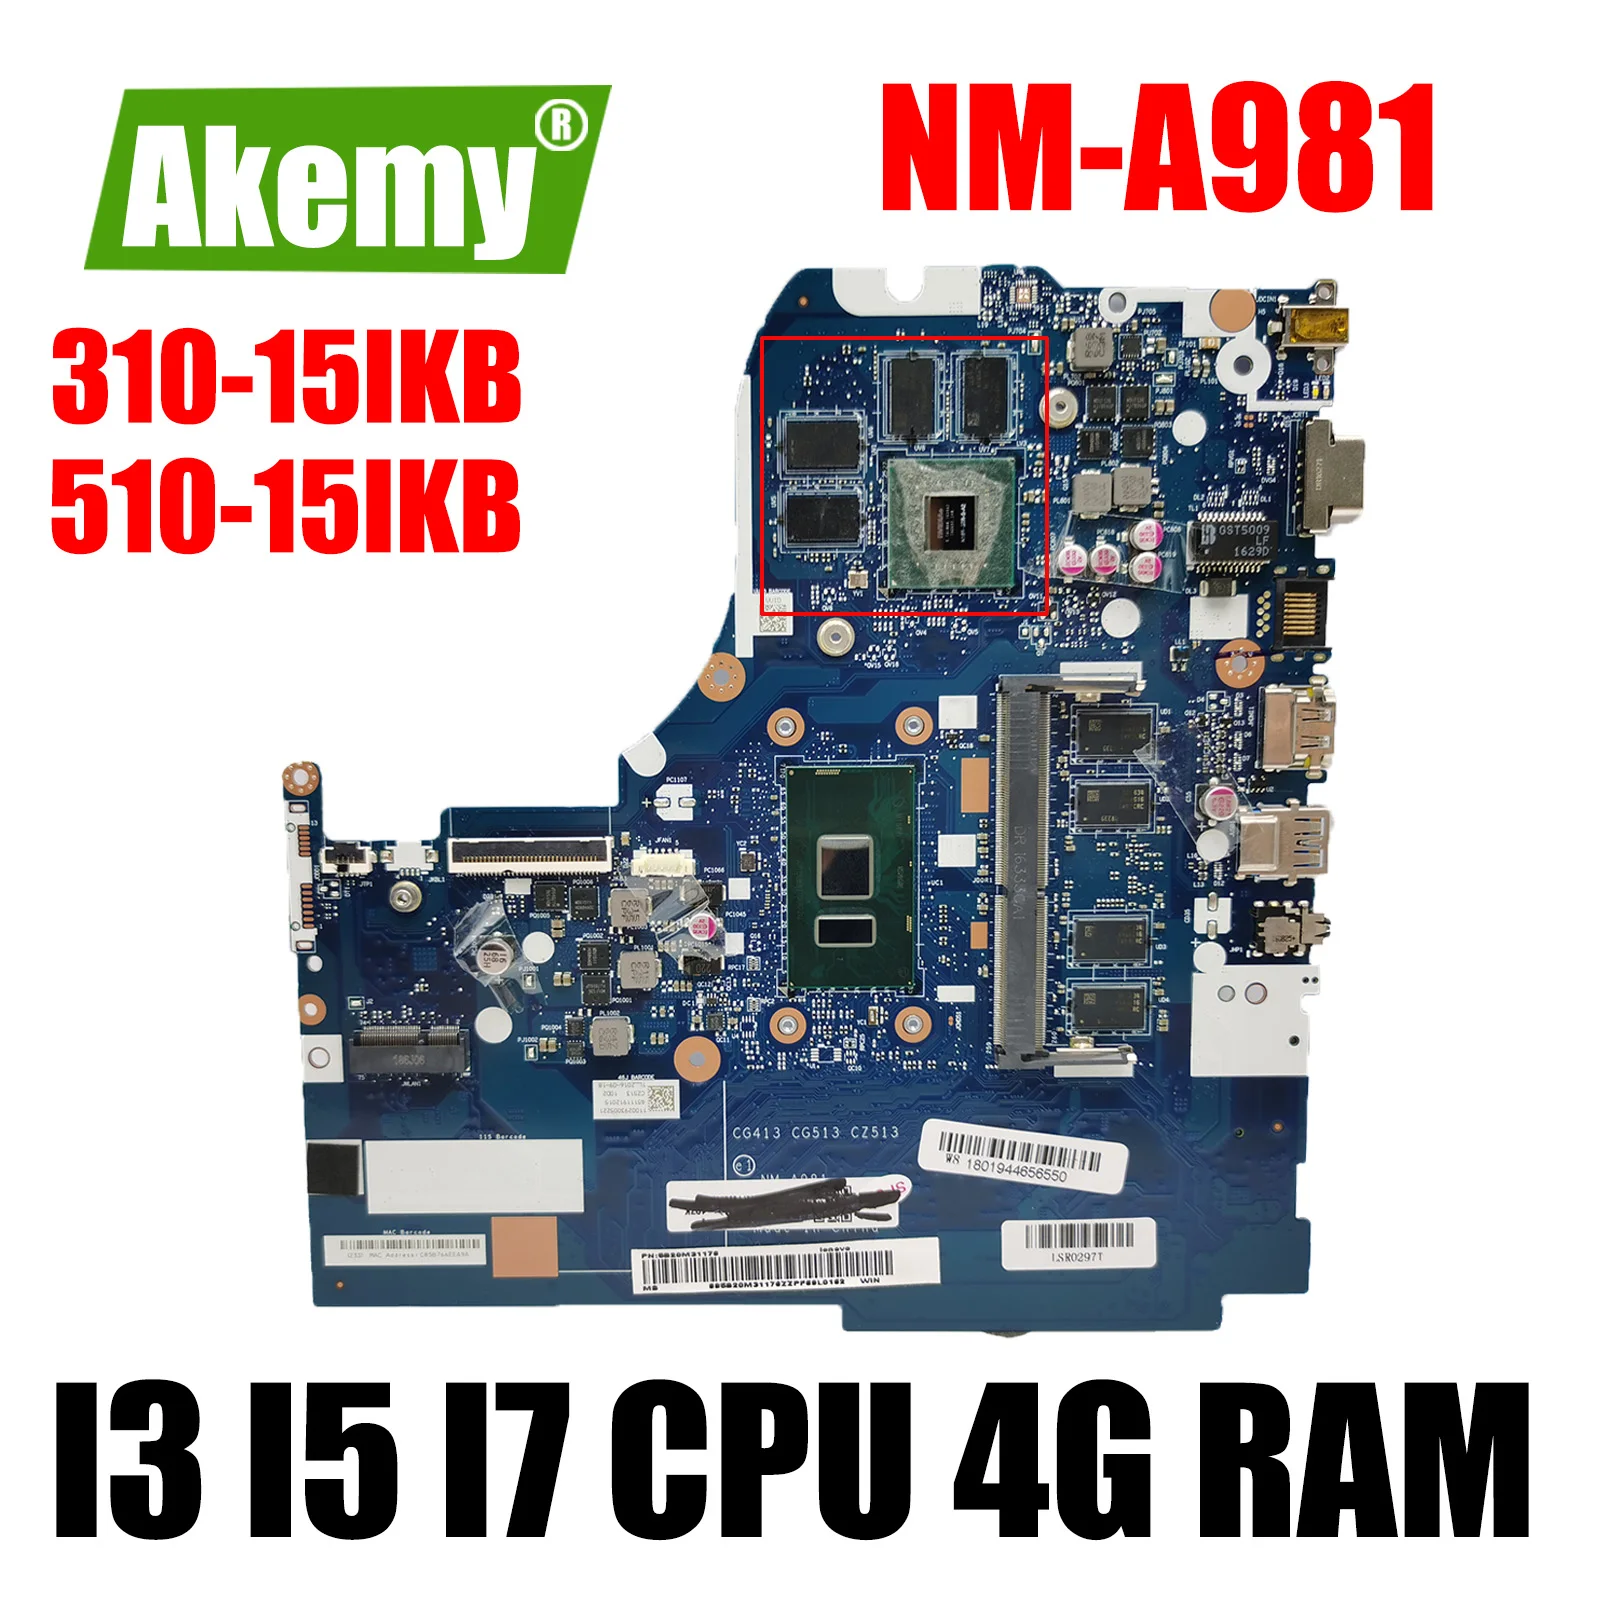 

NM-A981 motherboard for Lenovo 310-15IKB 510-15IKB Laptop motherboard CPU I3 I5 I7 6th Gen 7th Gen CPU GT920M GT940M GPU 4G RAM